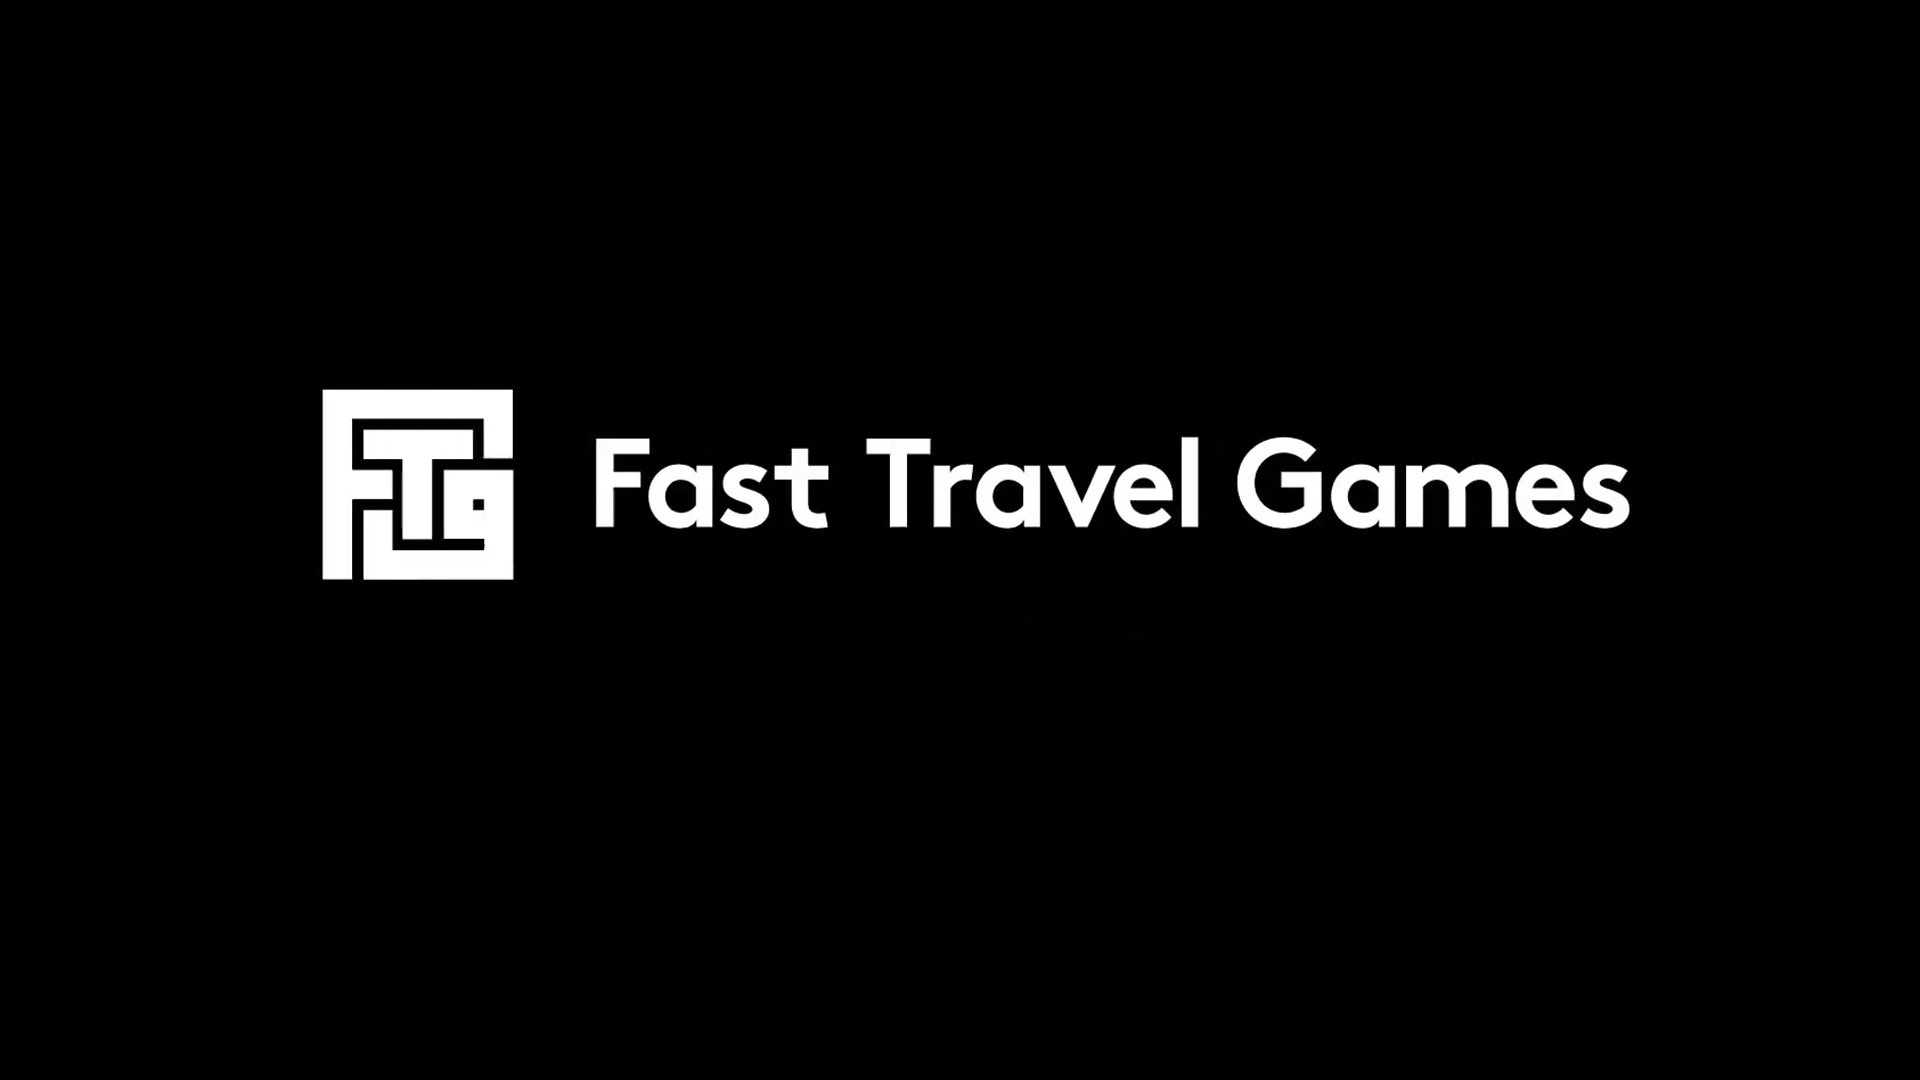 Fast Travel Games Pioneer VR Studio Raises $4M